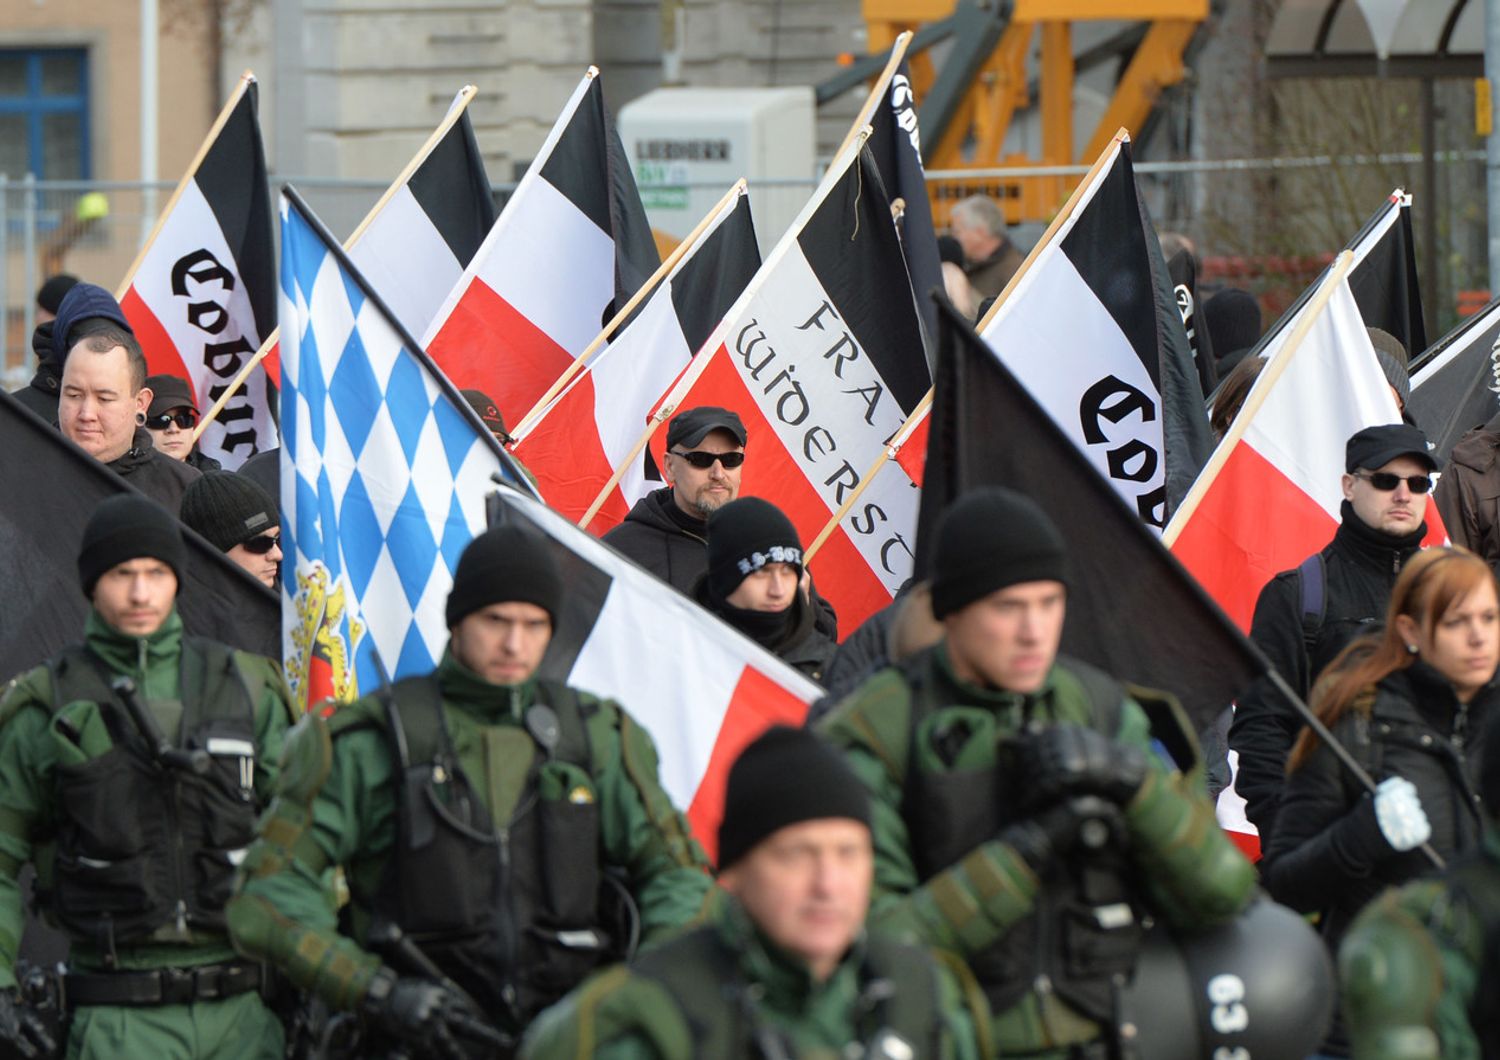 Marcia neonazista  Freies Netz Sued a Wunsiedel, Germania, 16 novembre 2013